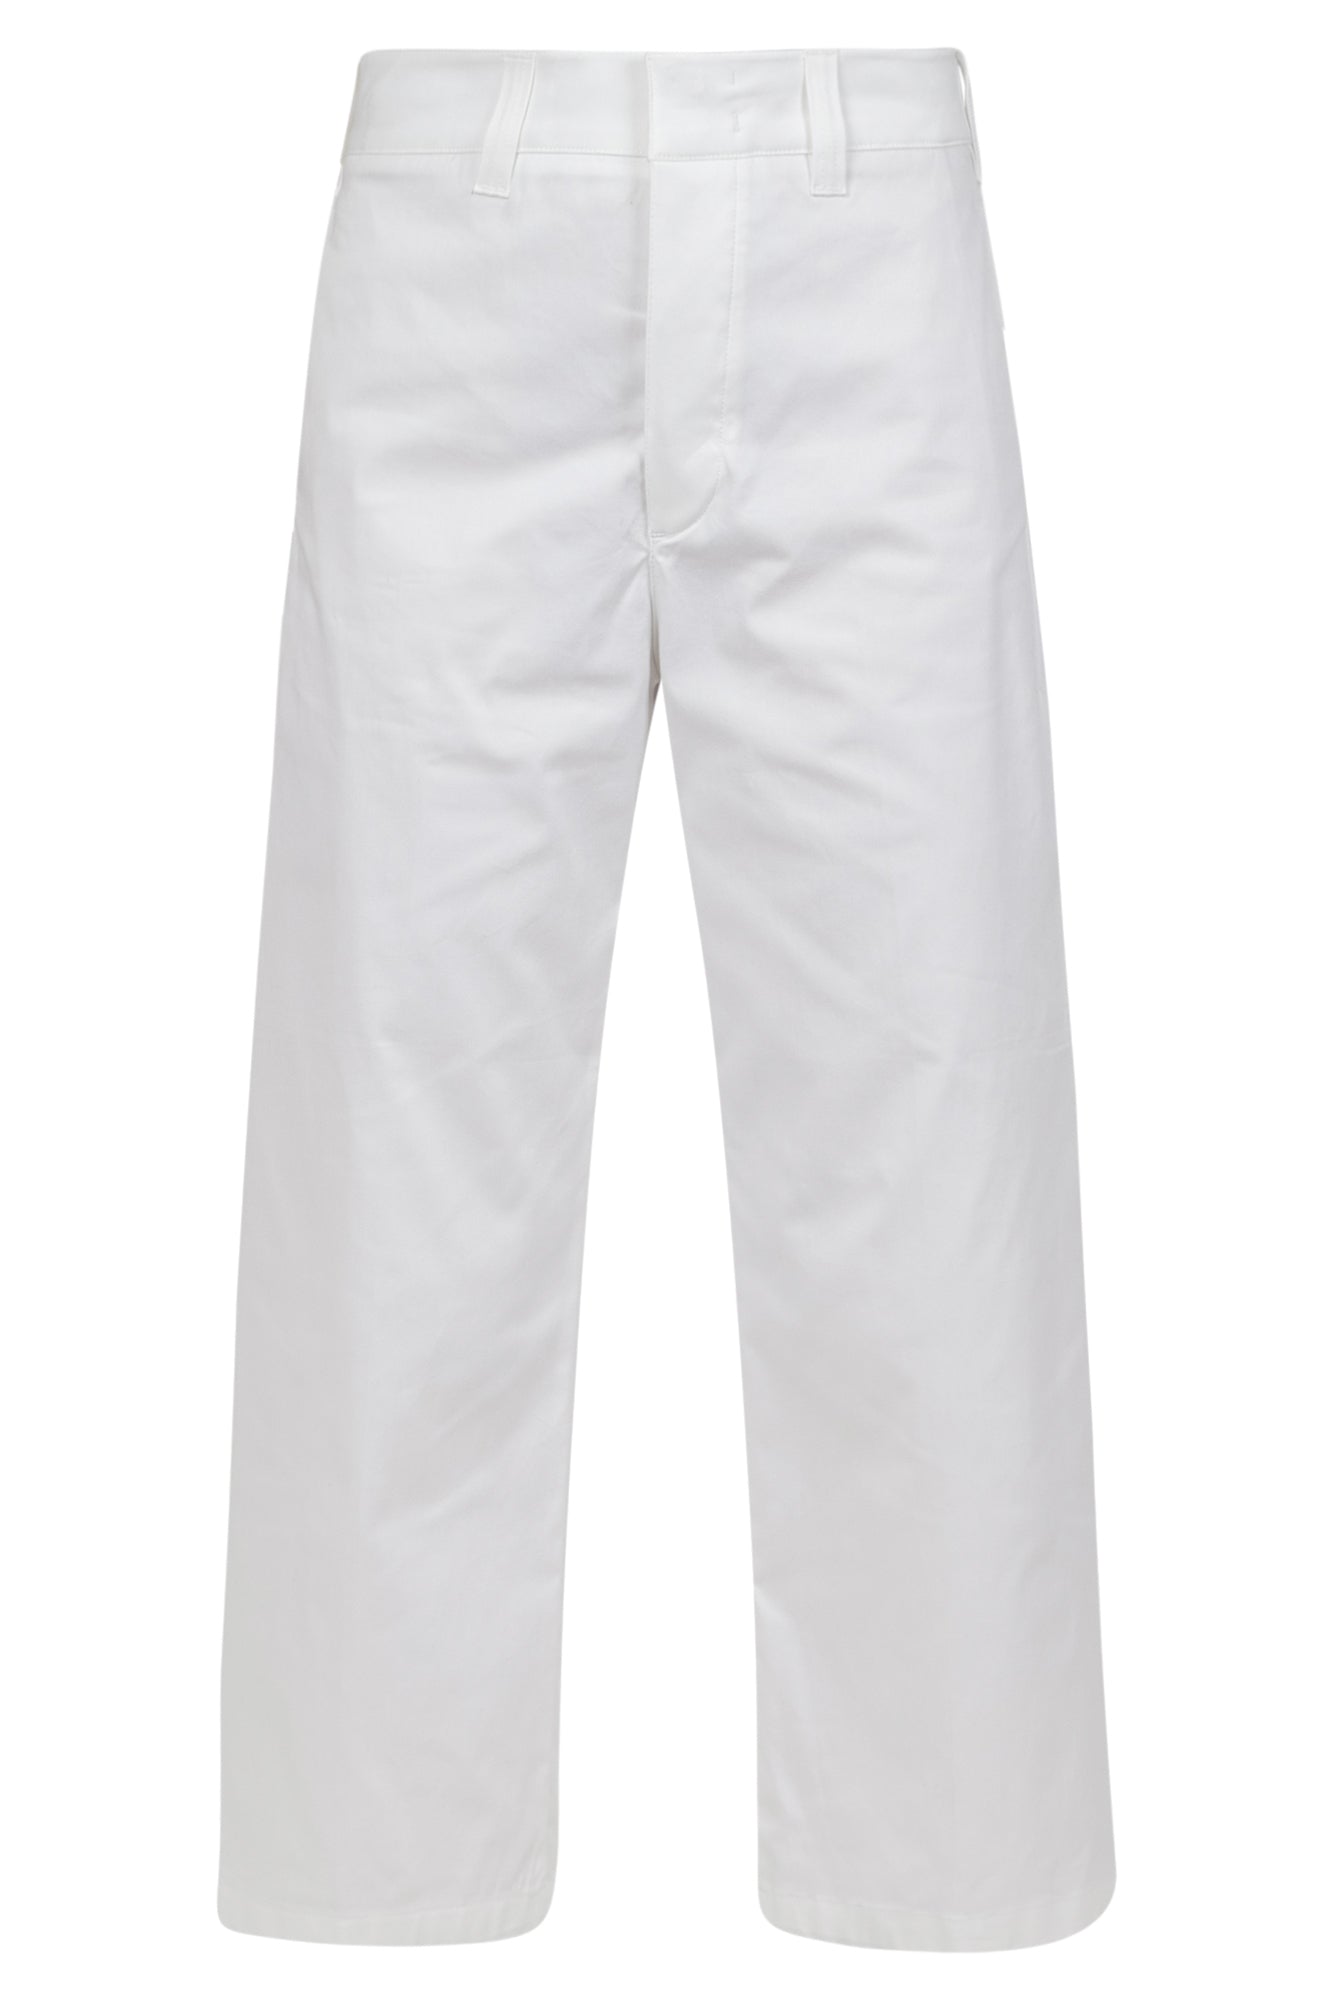 Department 5 - Pantalone - 430415 - Bianco